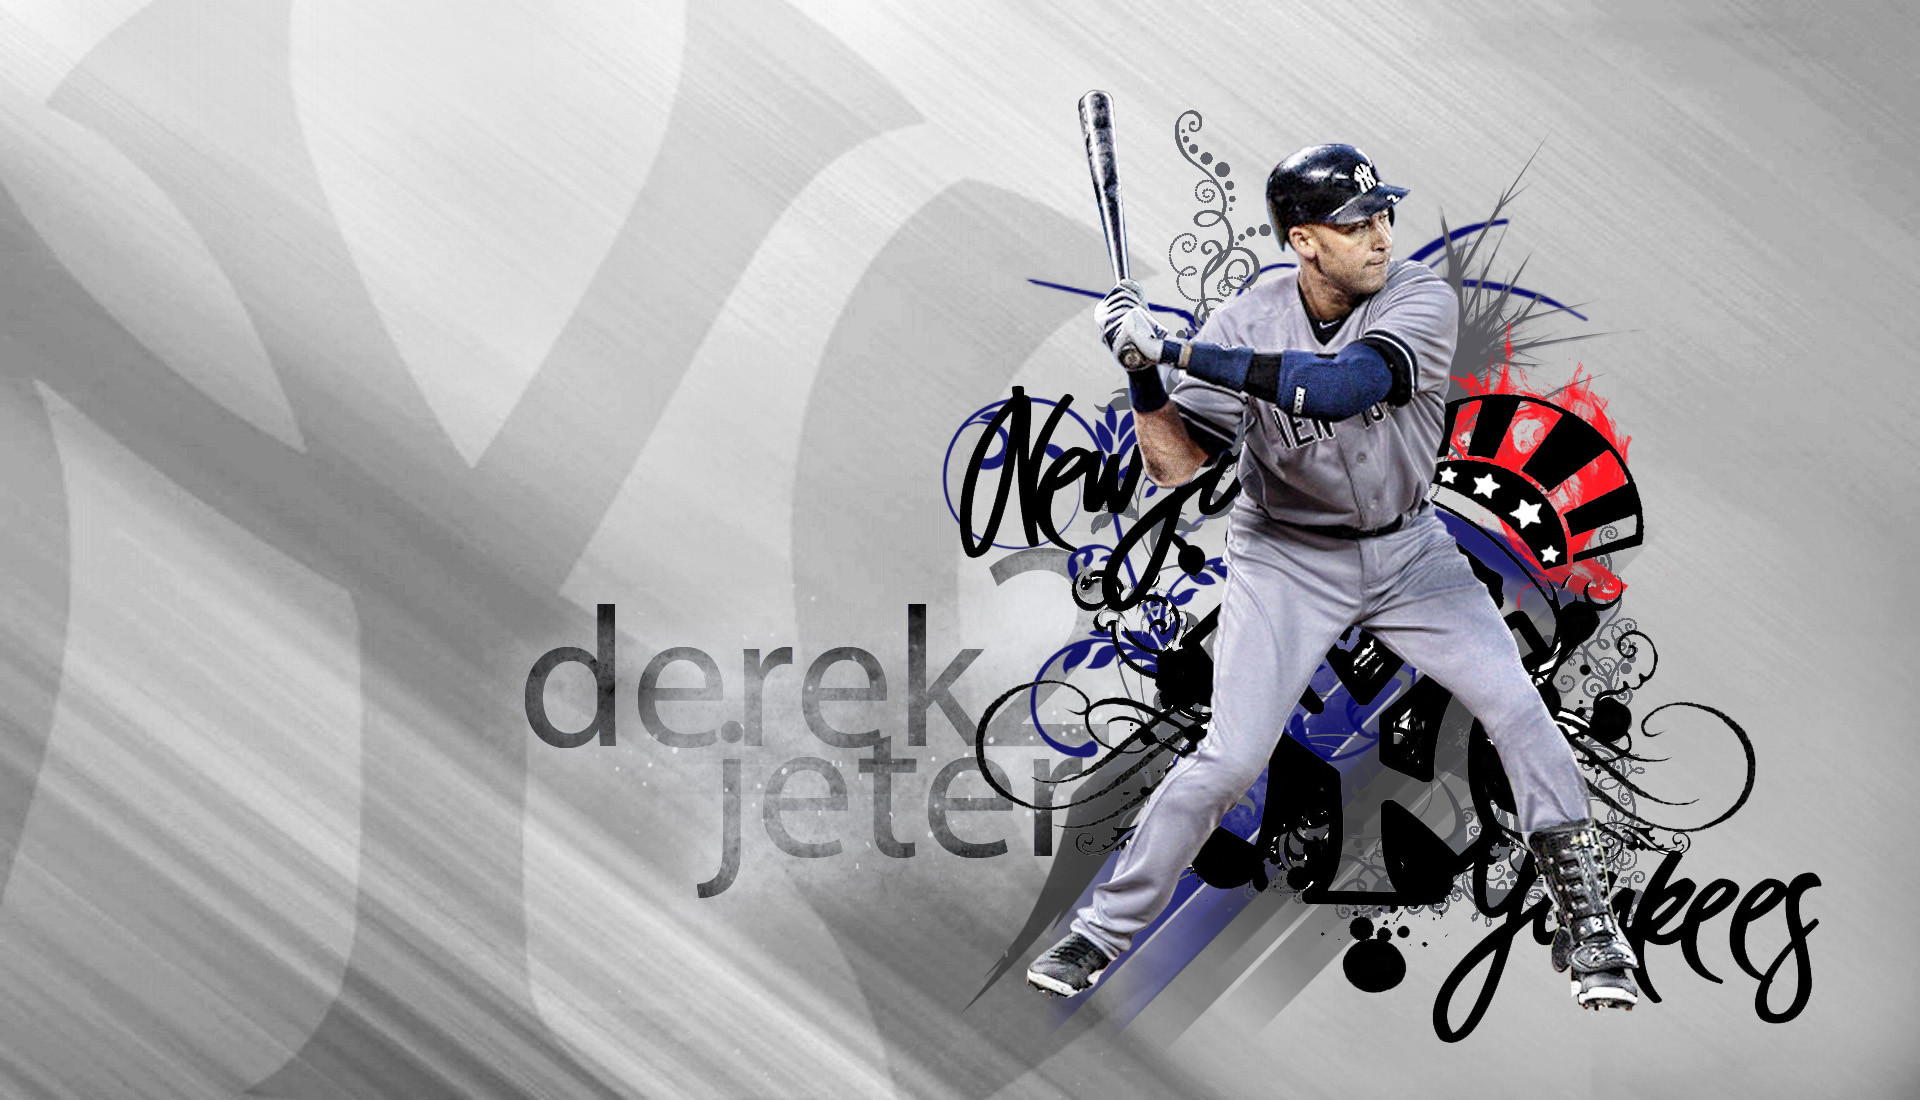 1920x1100 Derek Jeter New York Yankees Wallpaper.